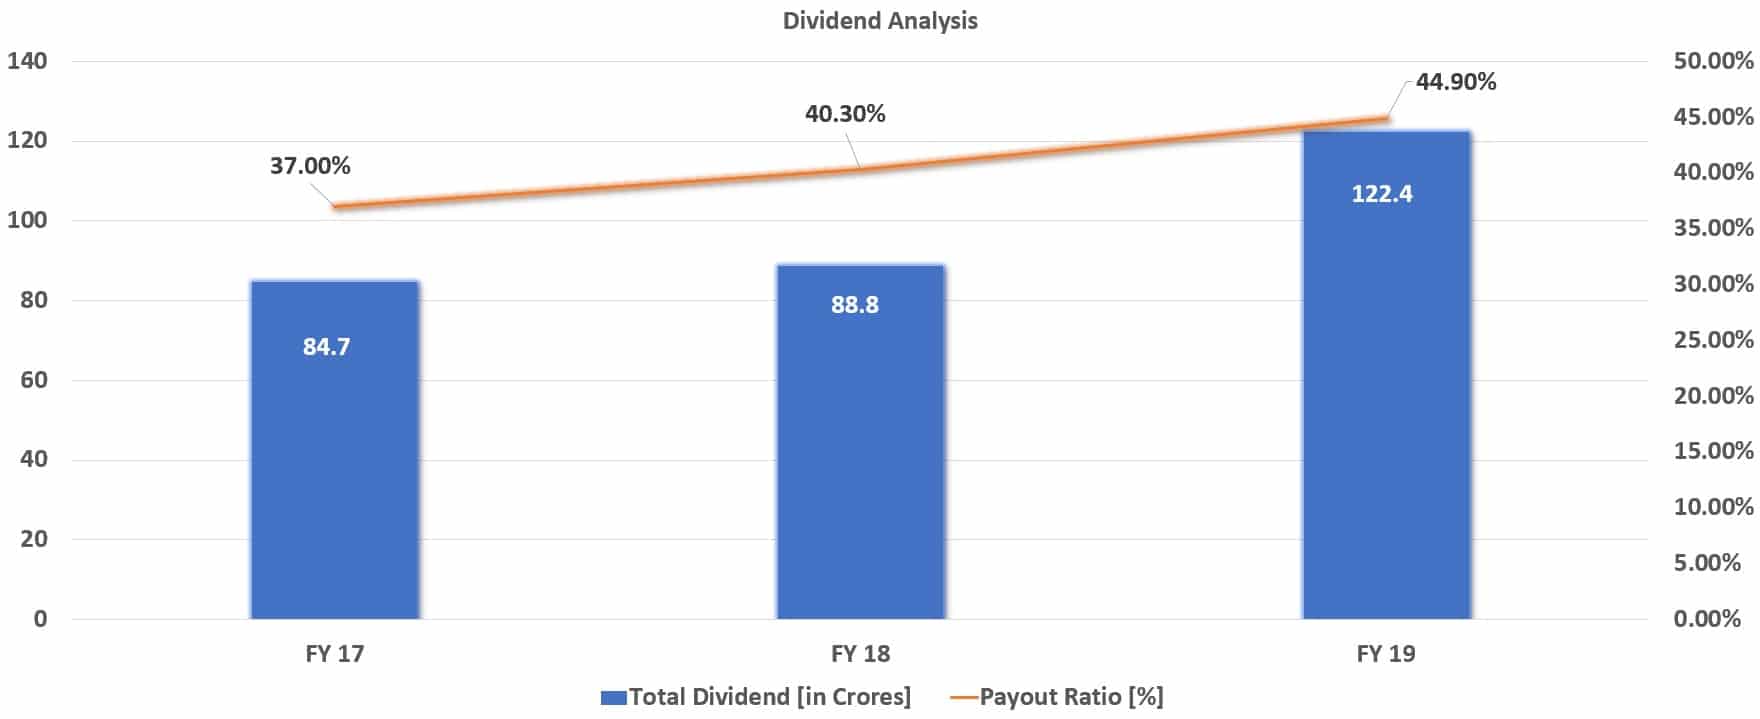 IRCTC Dividend Analysis